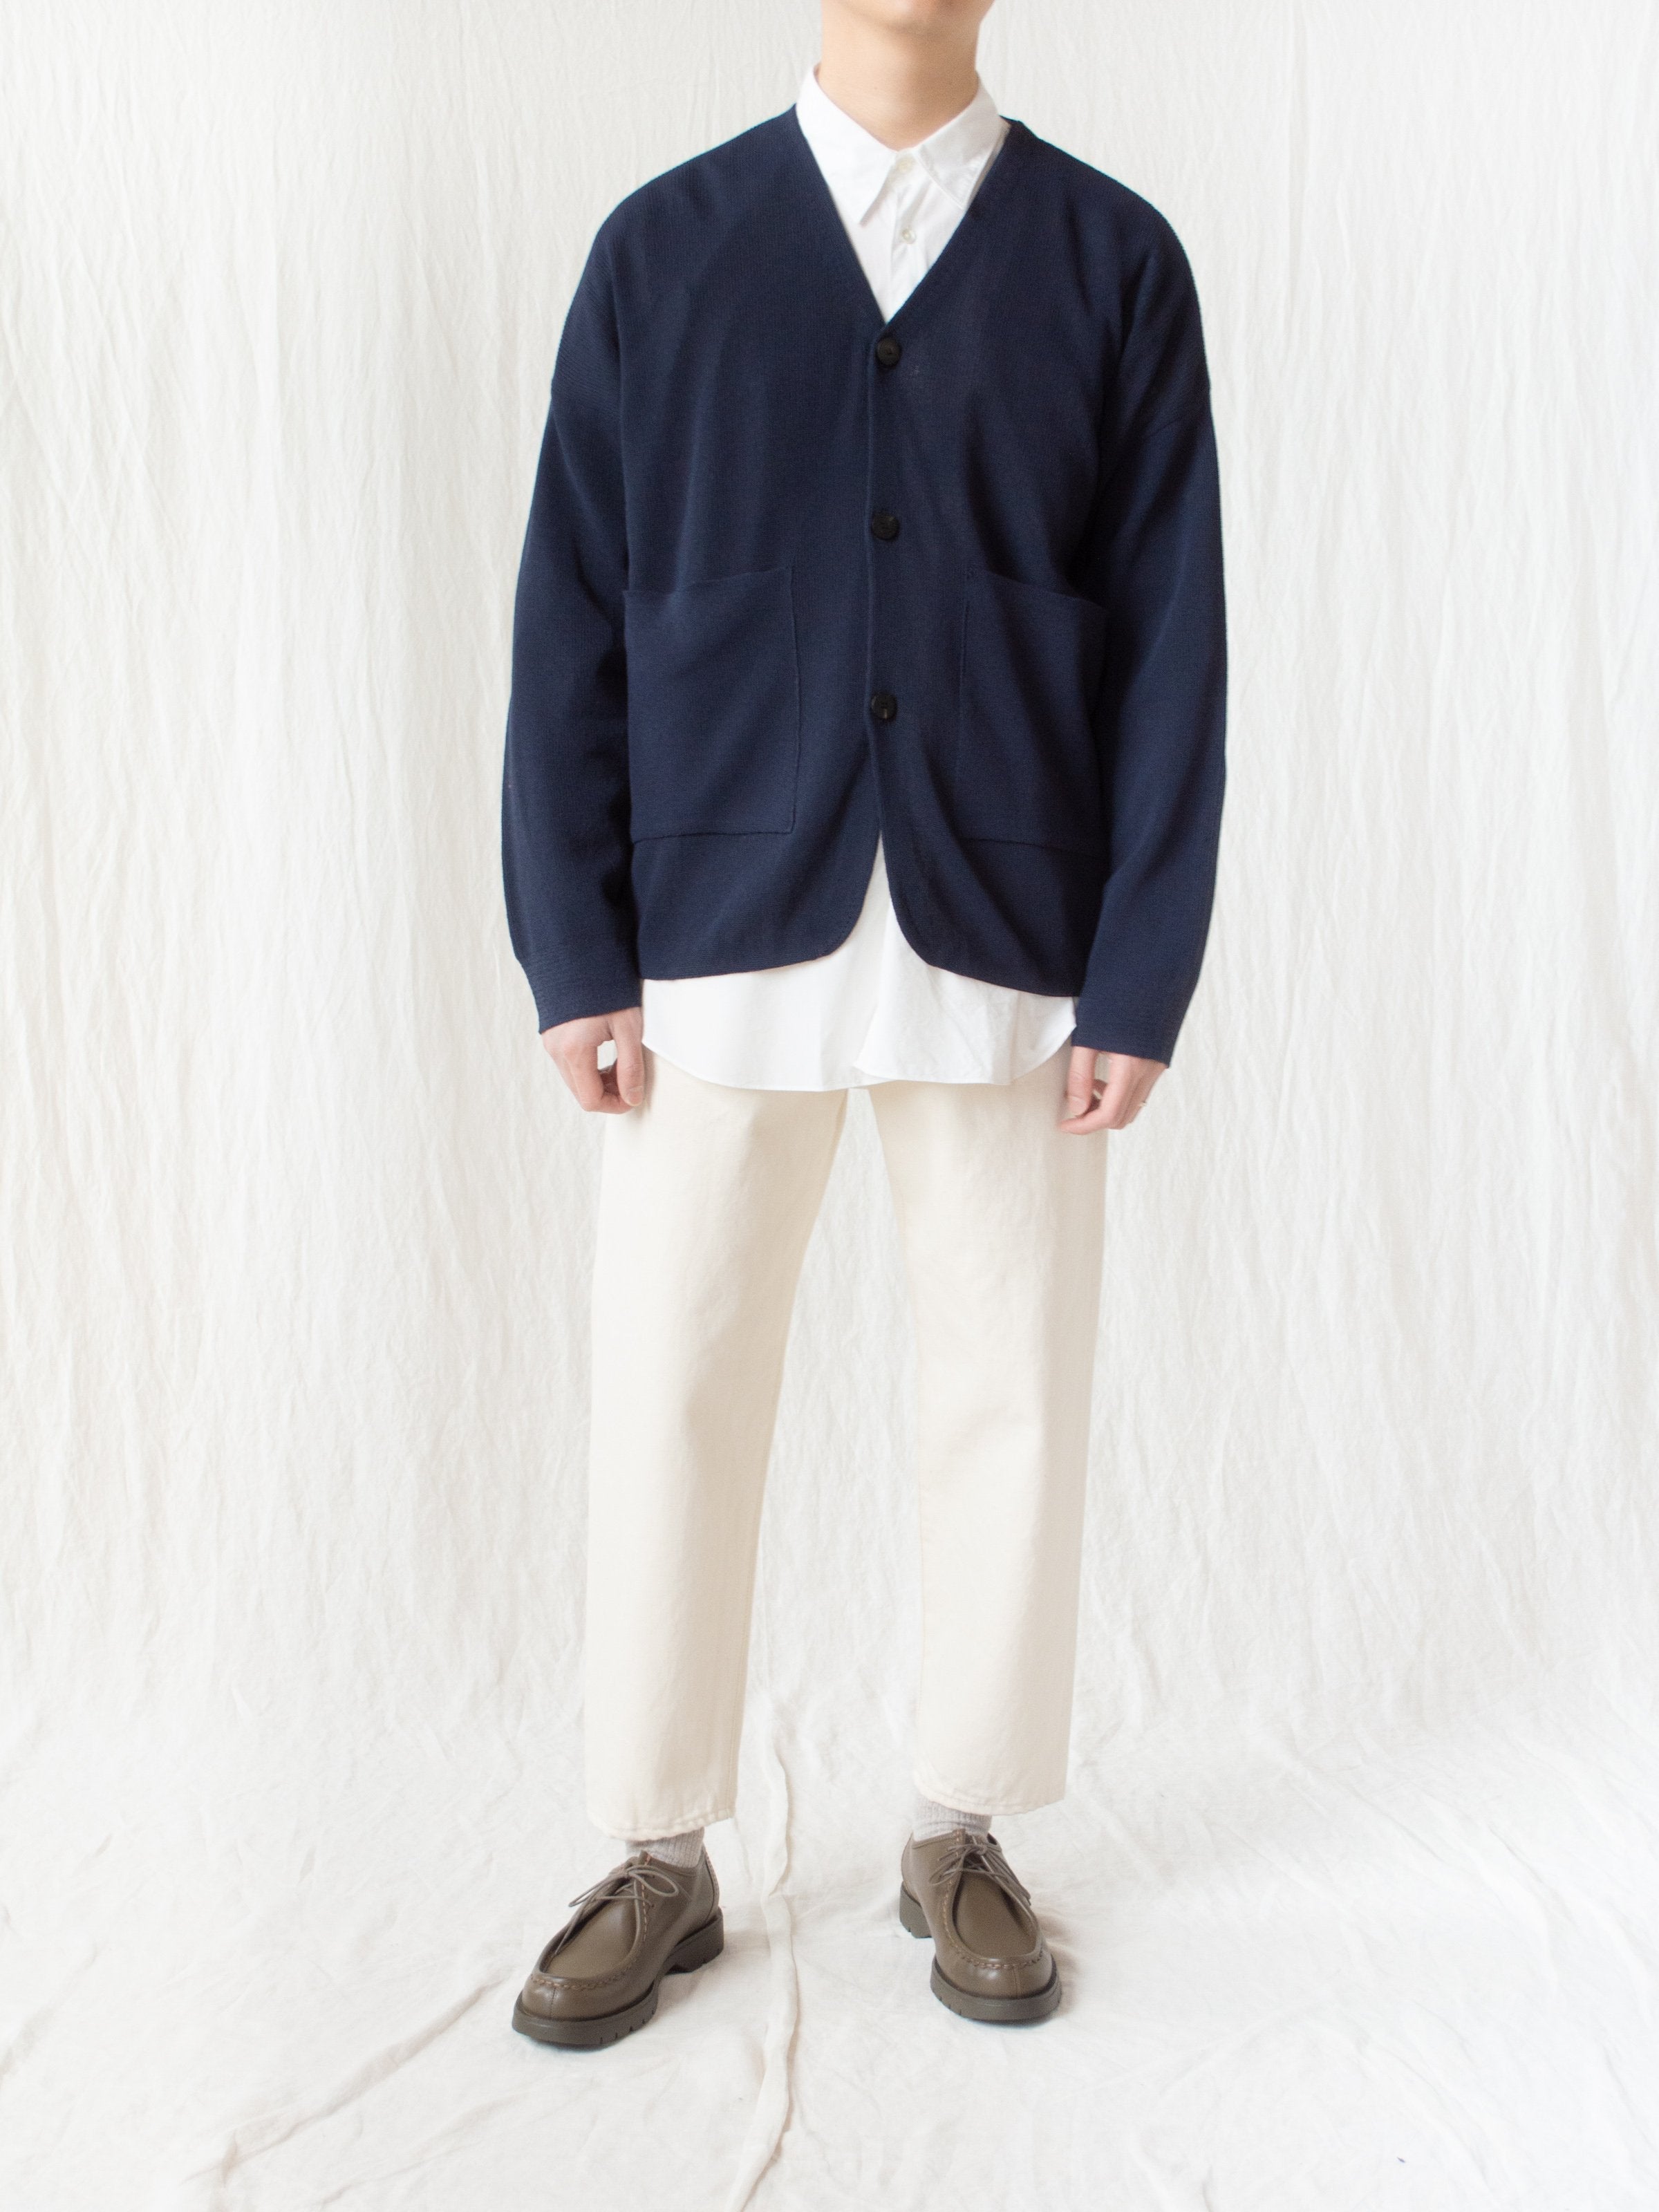 Namu Shop - Fujito B/S Shirt - White